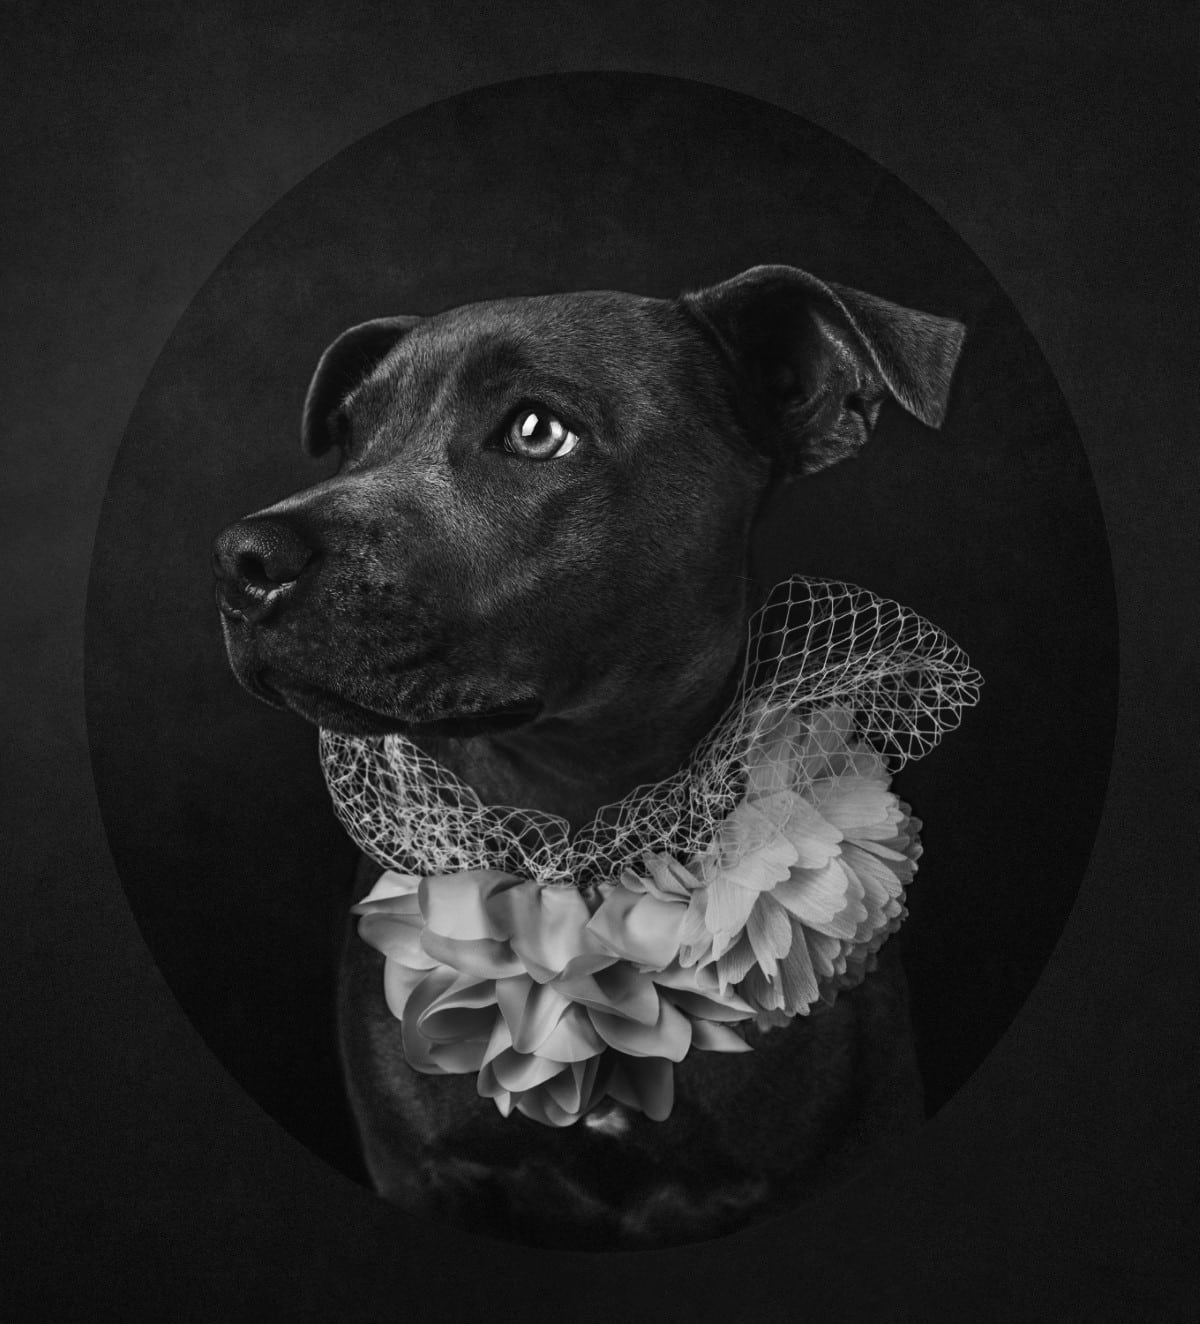 Creative portrait of a black dog